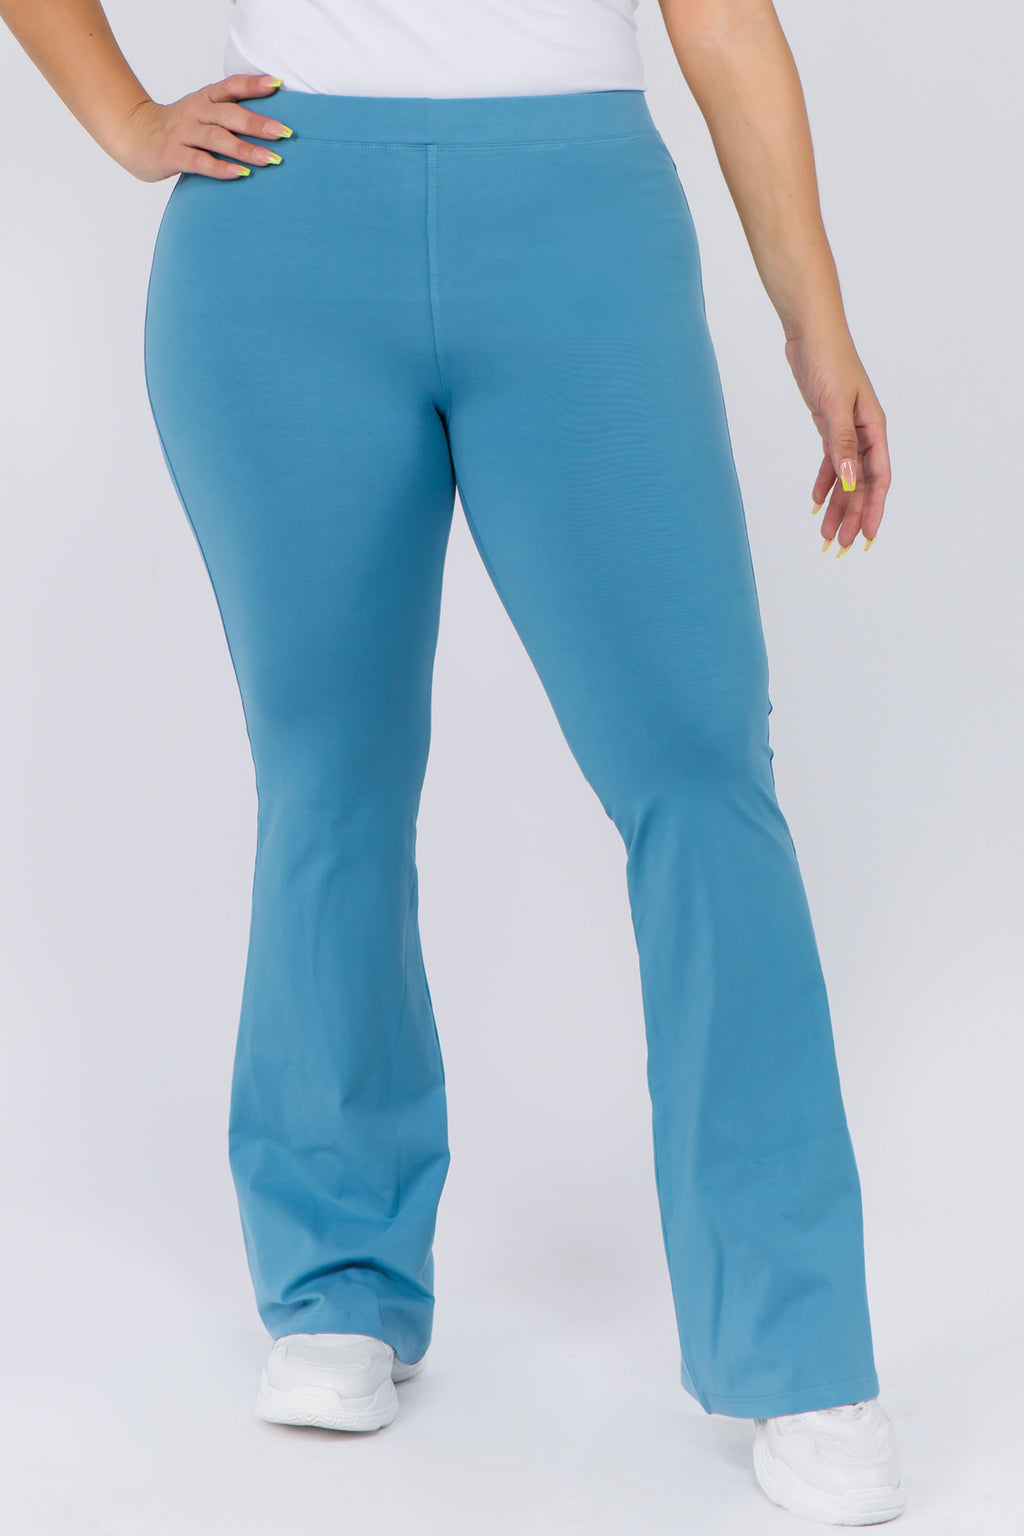 slate blue cotton flare legging